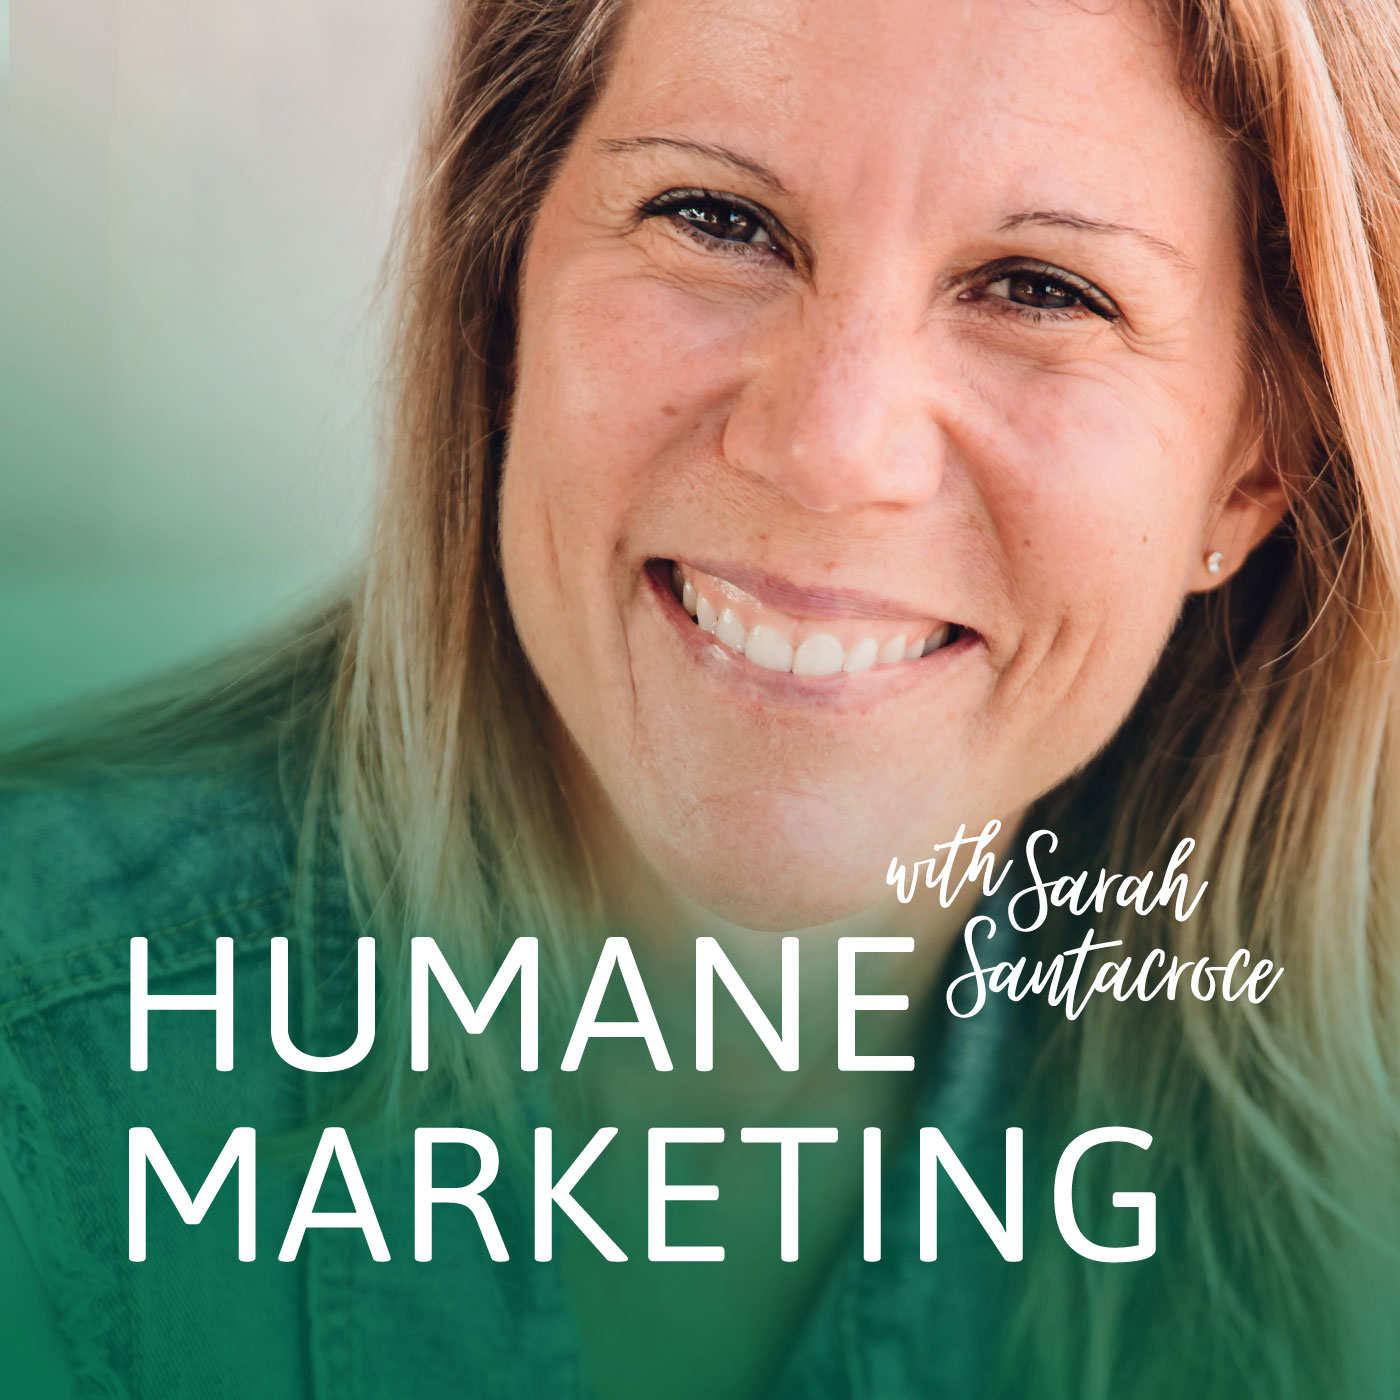 the humane marketing podcast with sarah santacroce